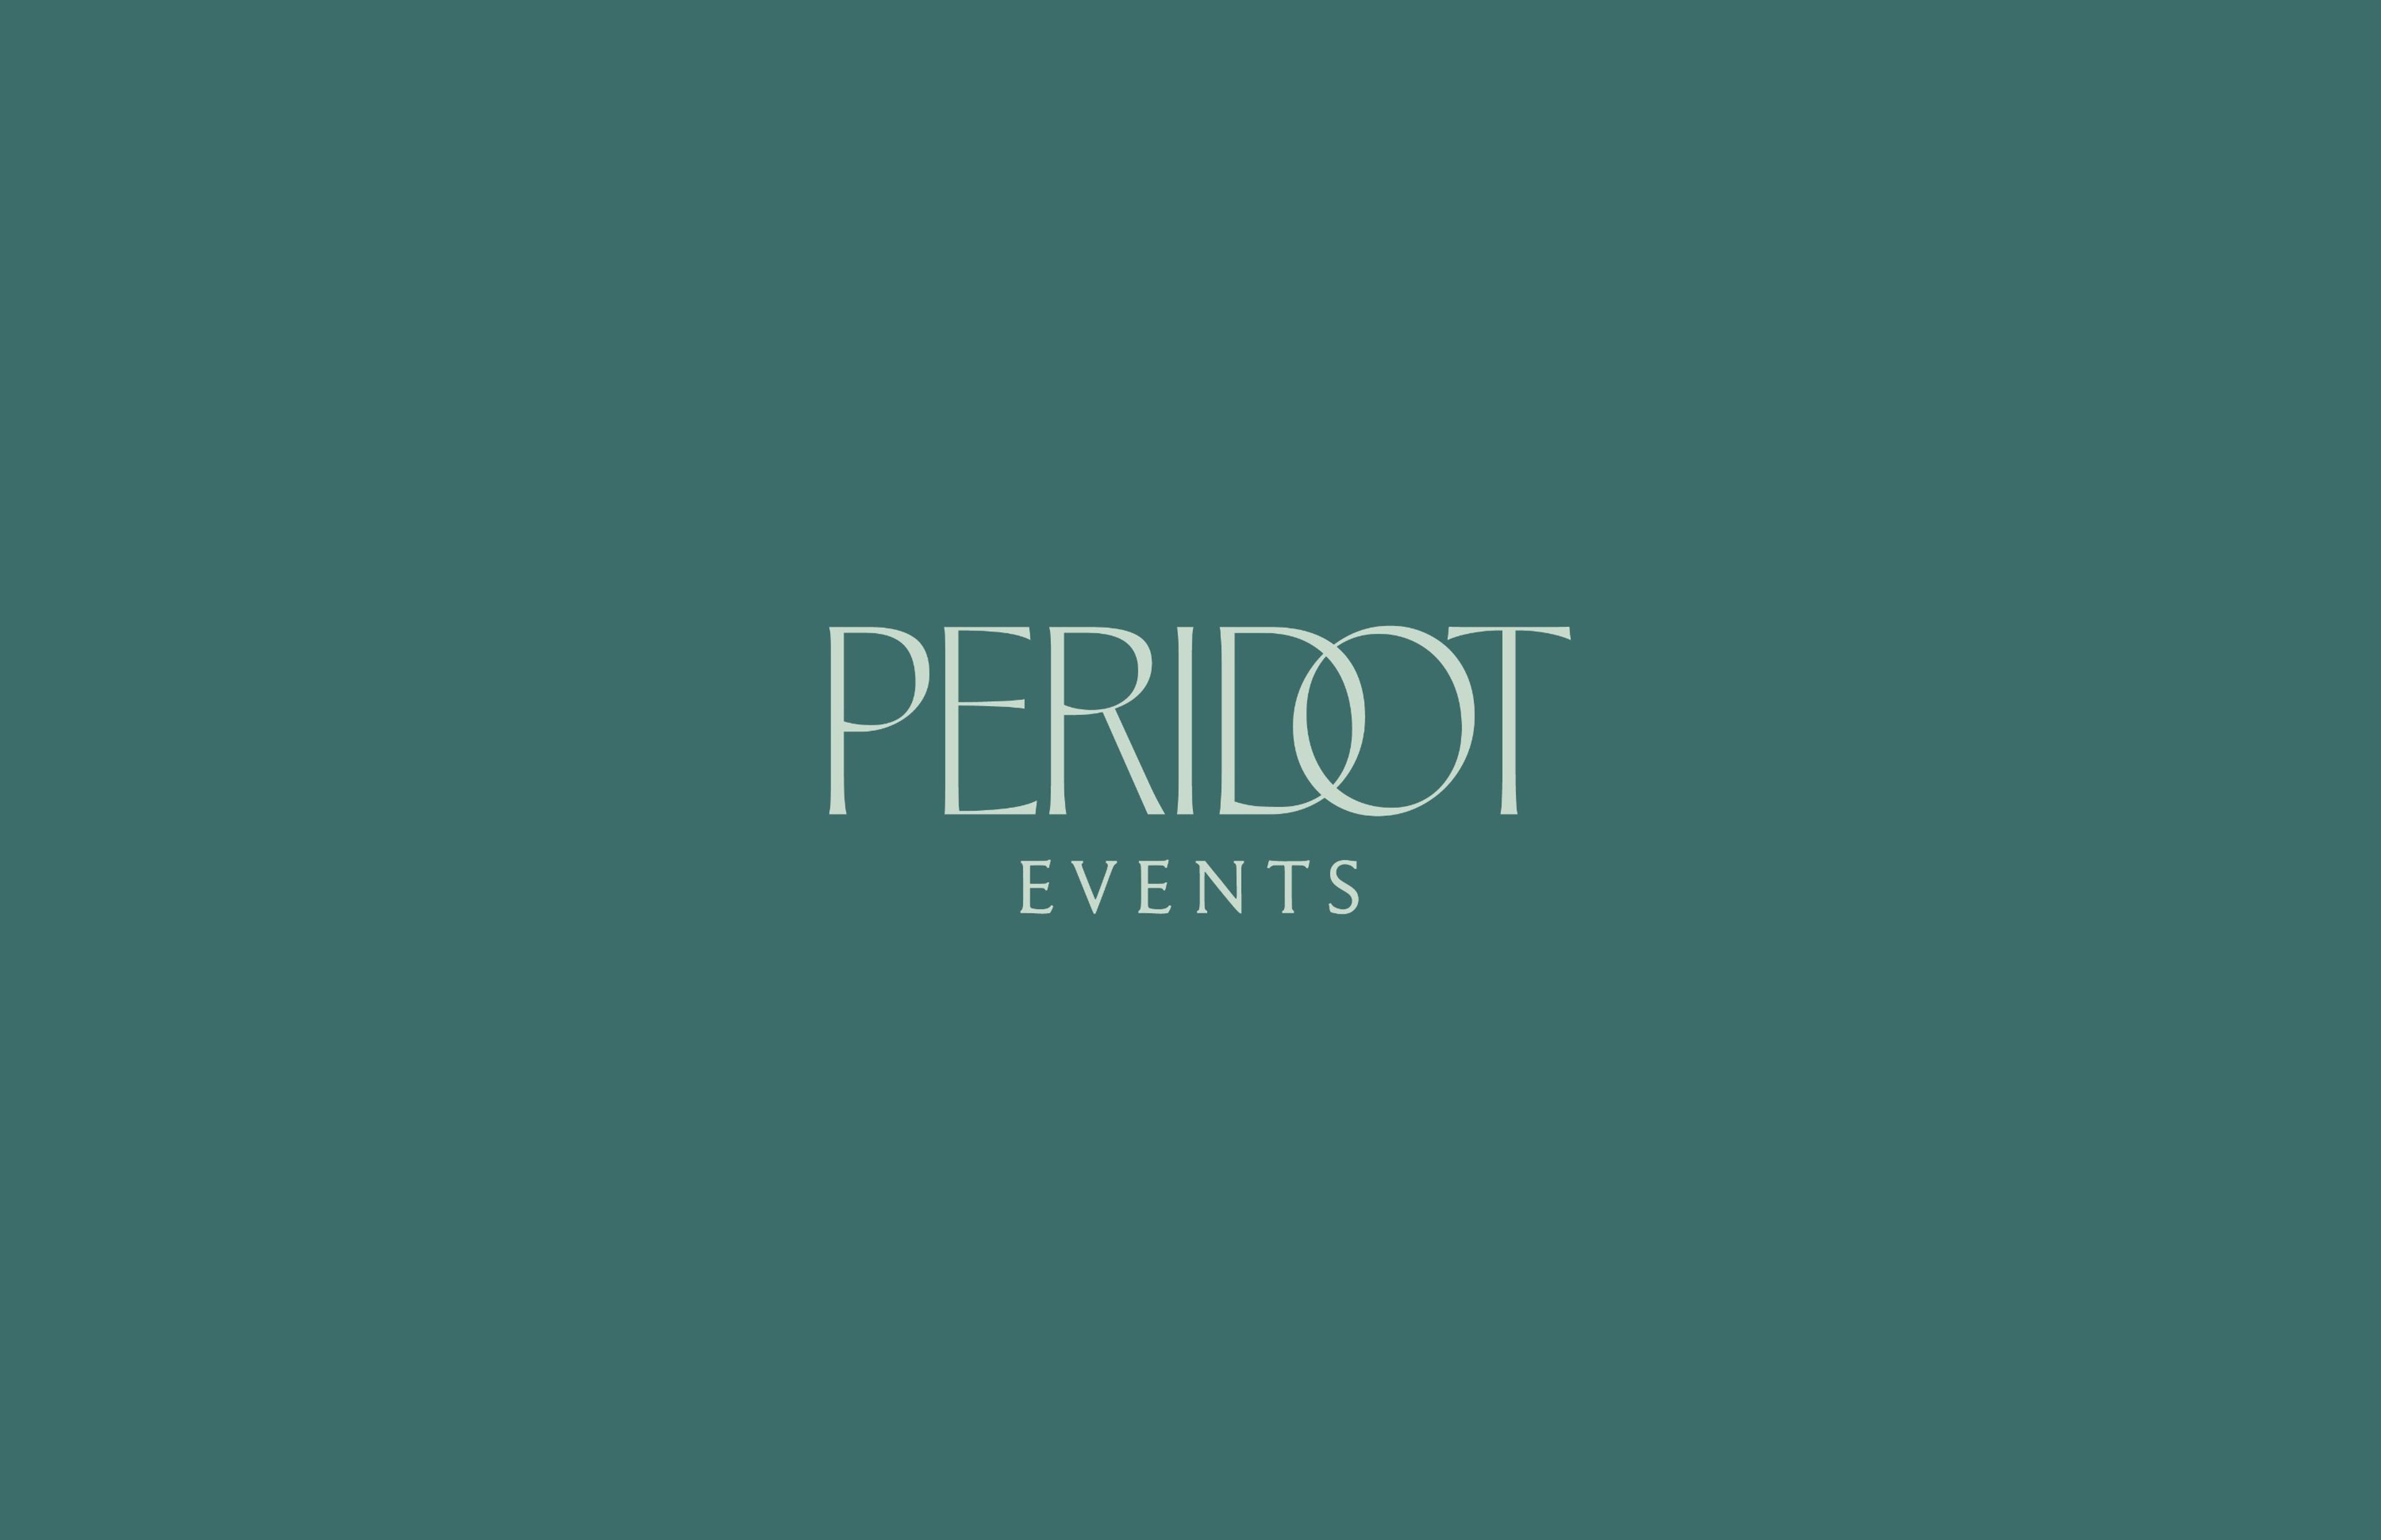 Peridot Events